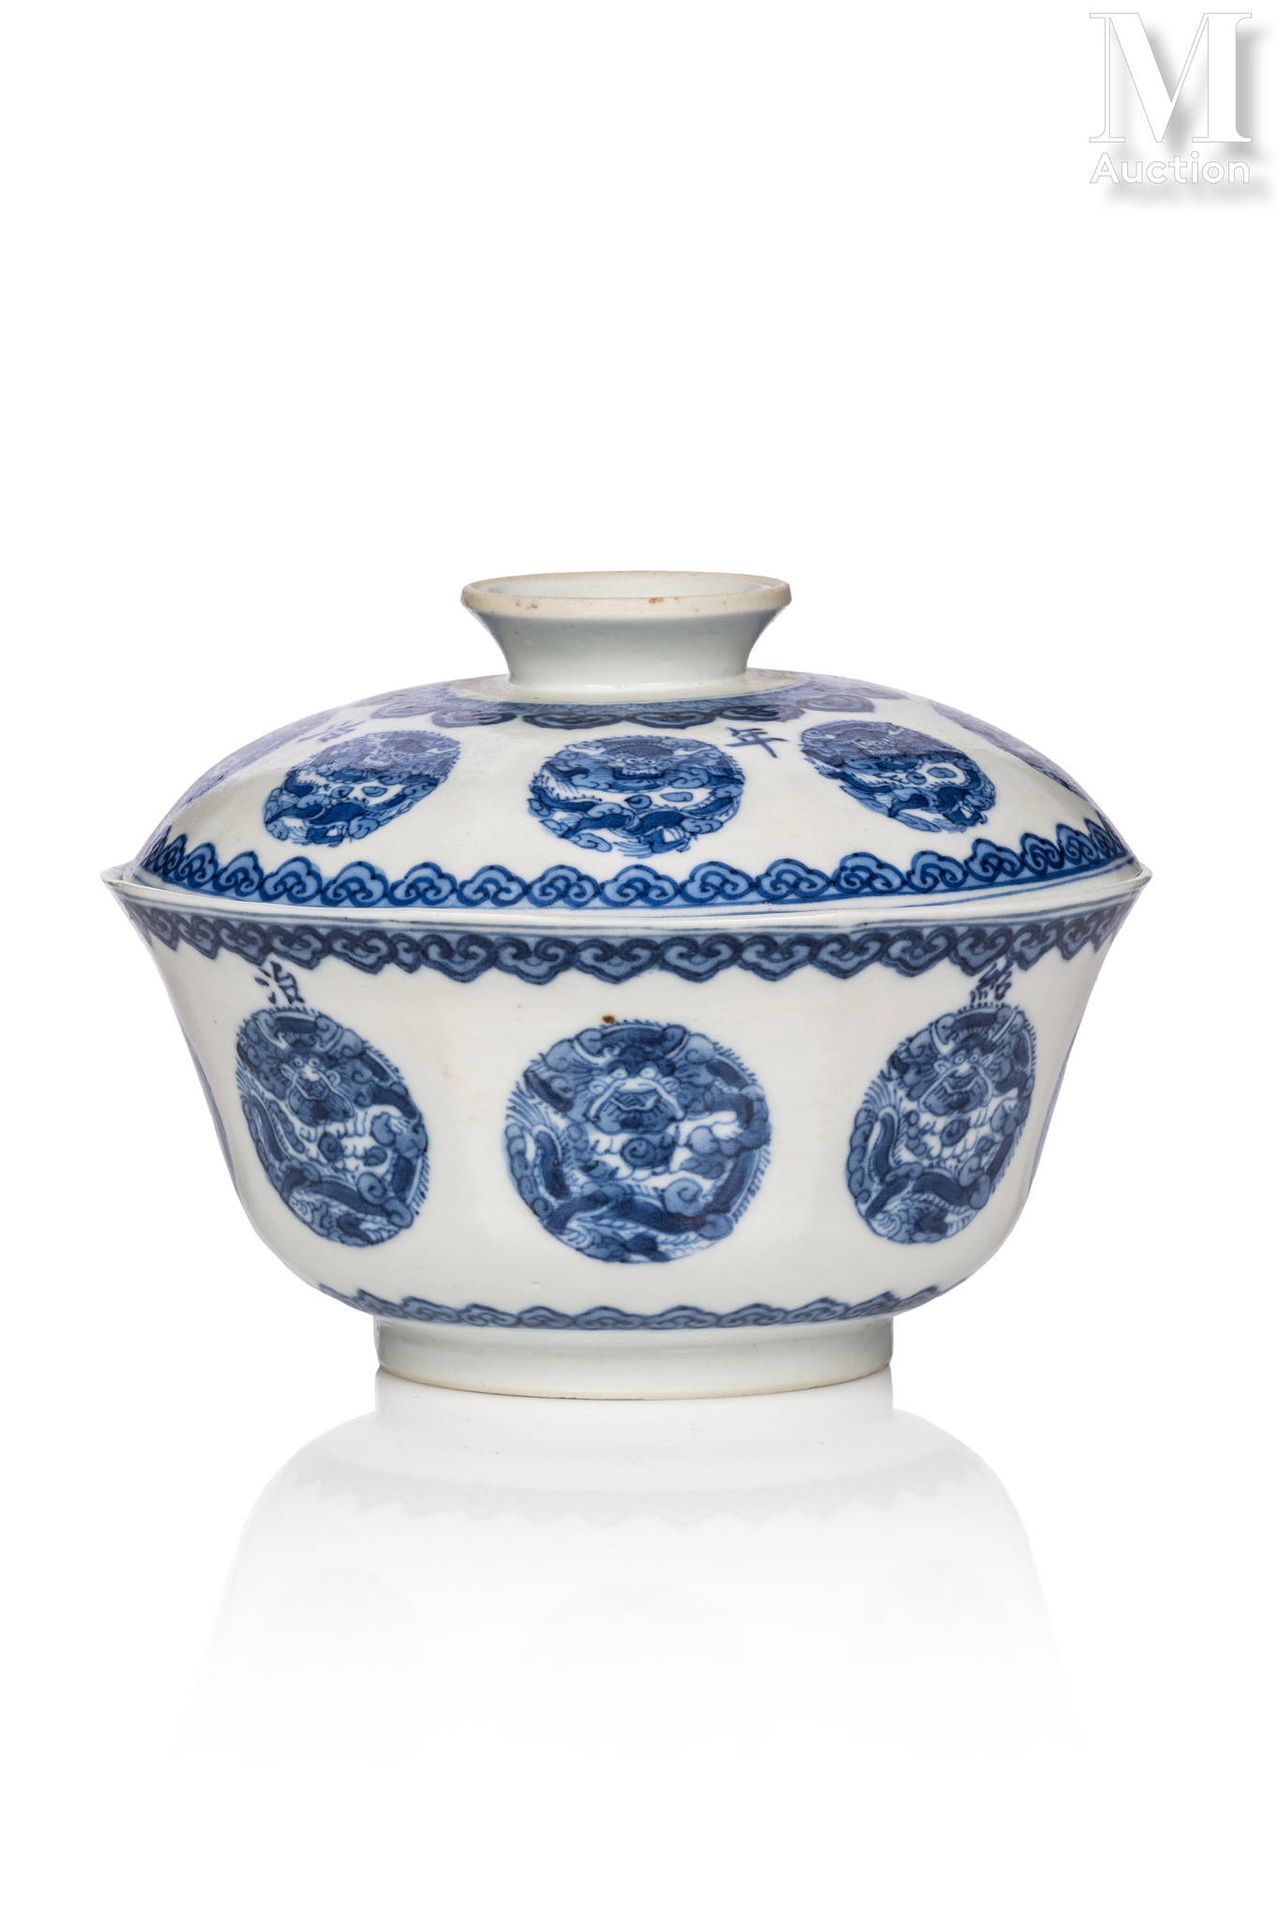 VIETNAM, XIXe siècle Gedeckte Schüssel aus Porzellan "Bleu de Hue".

Auf einem k&hellip;